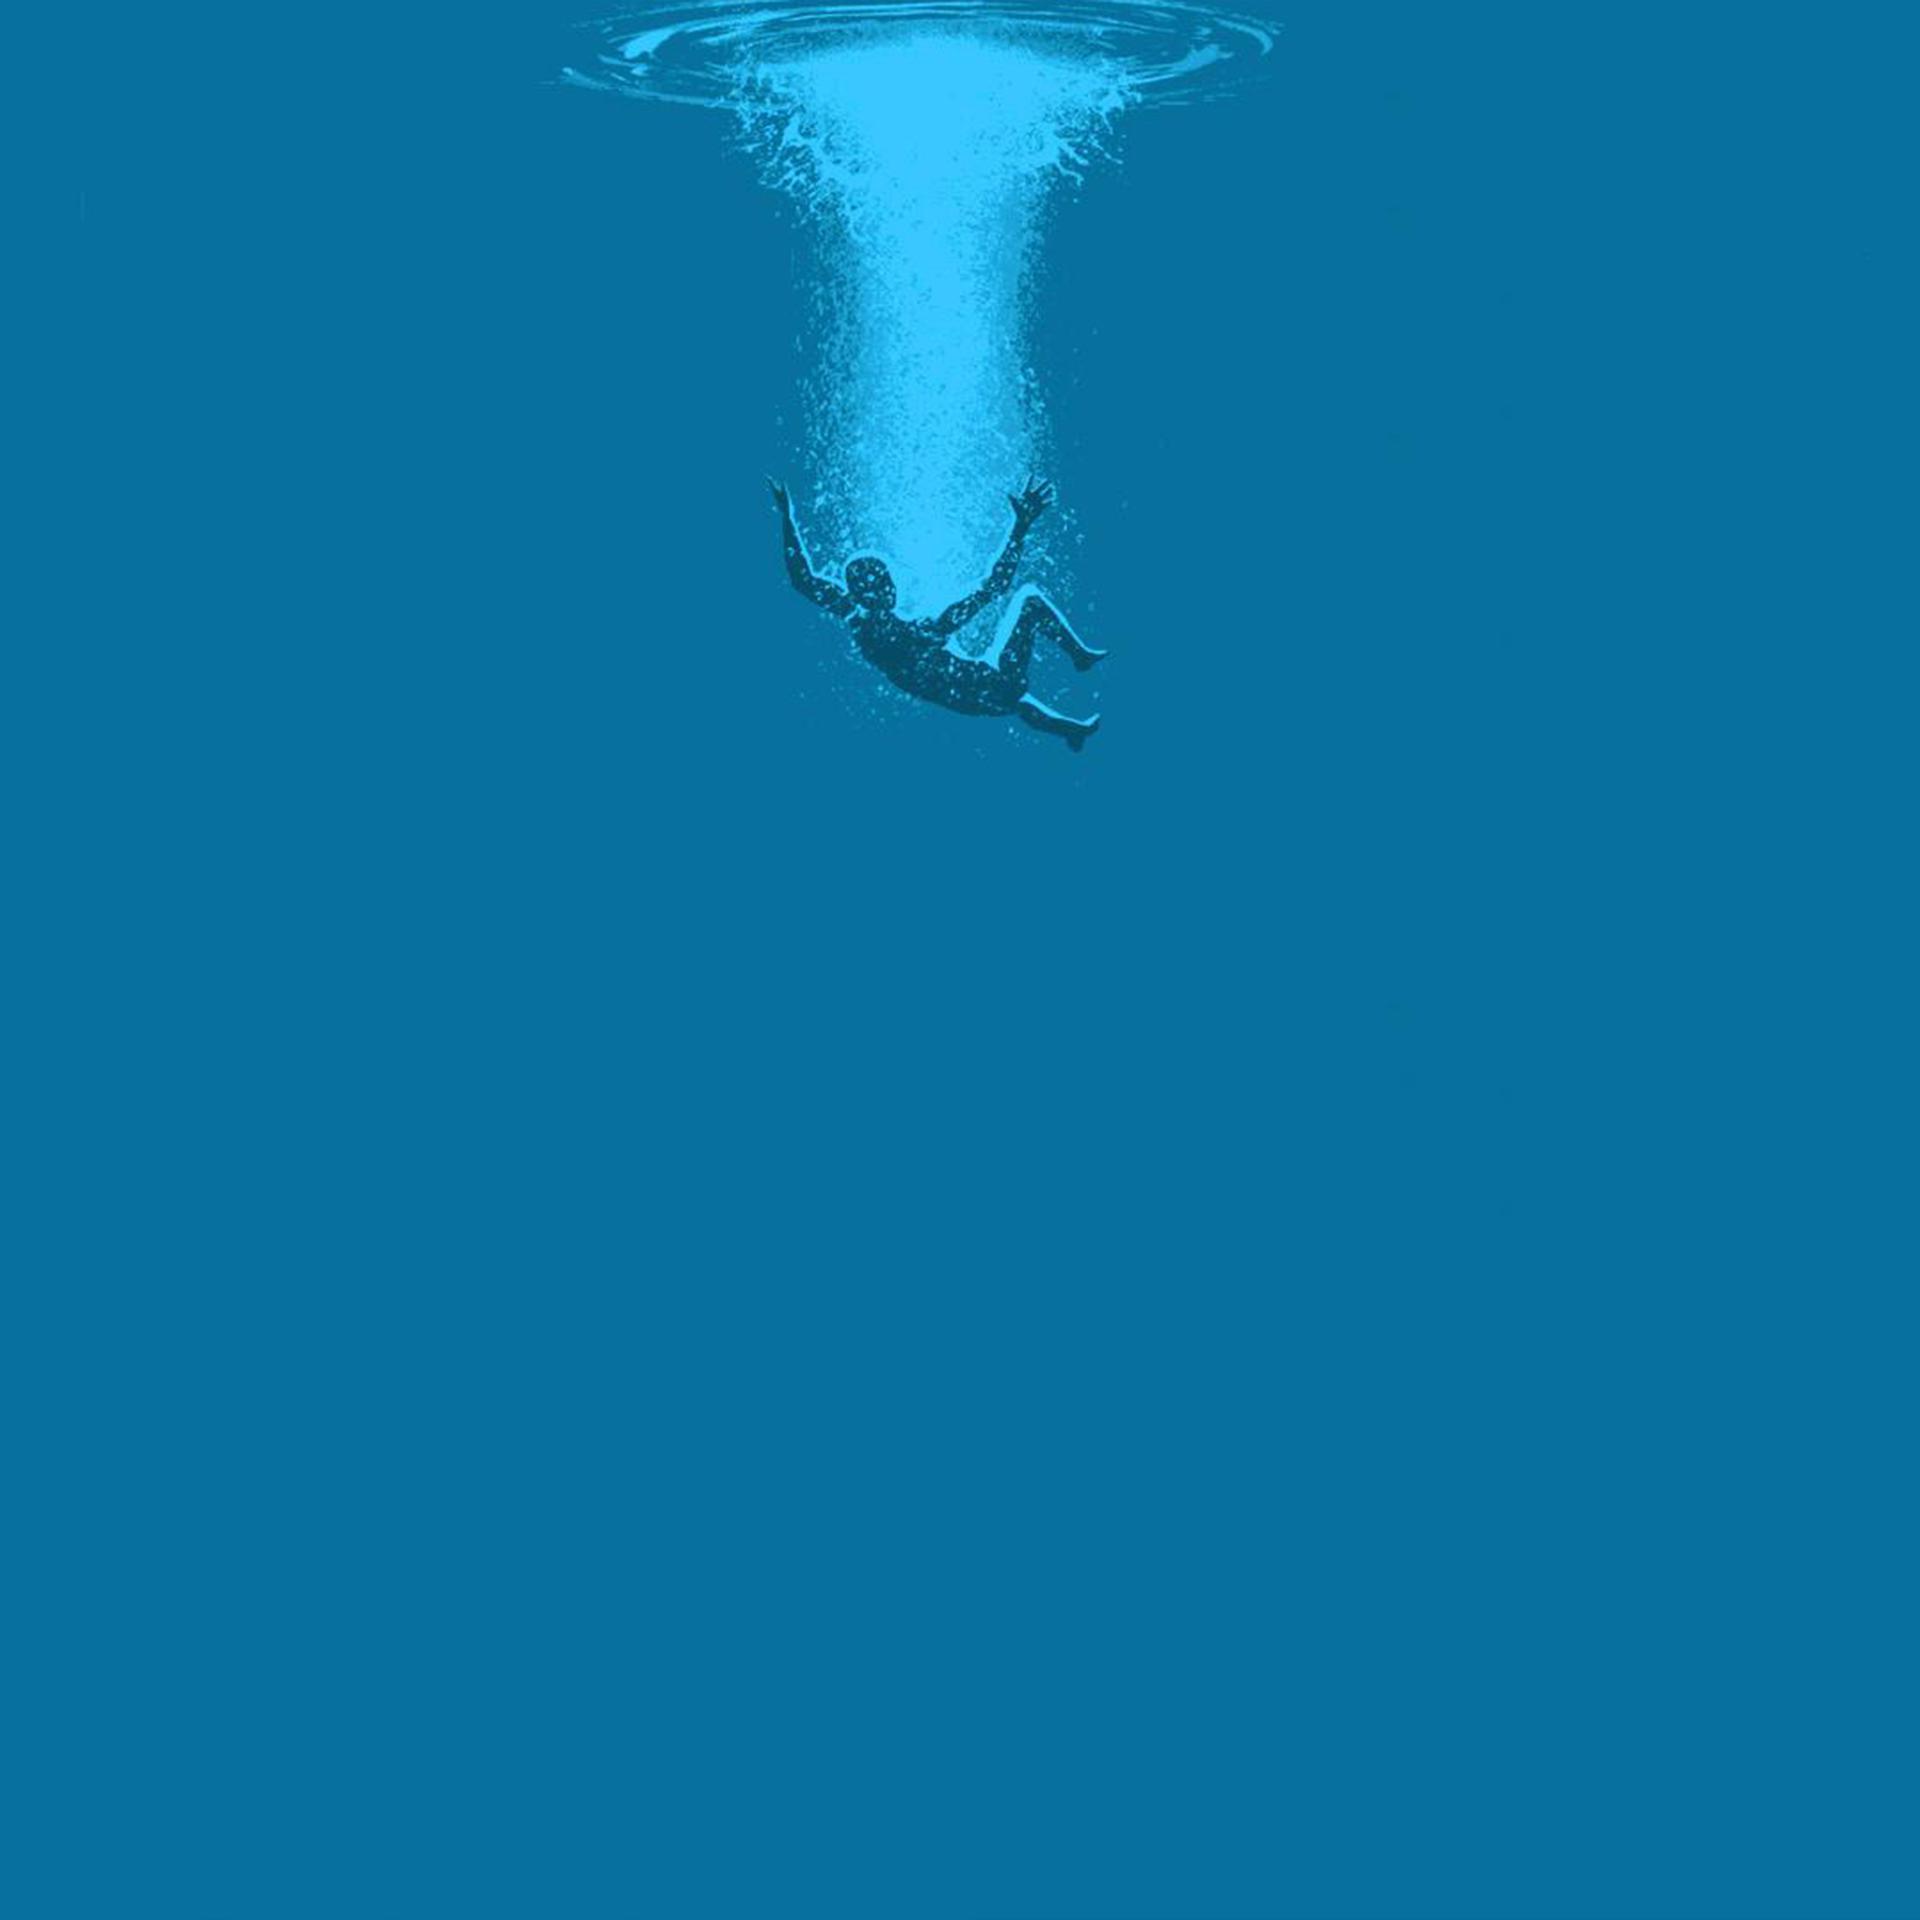 Into the water below. Тонущий человек арт вид сверху. Как выглядит тонущий человек воронка. Тонущий человек под водой обои на телефон. Трек Drown.